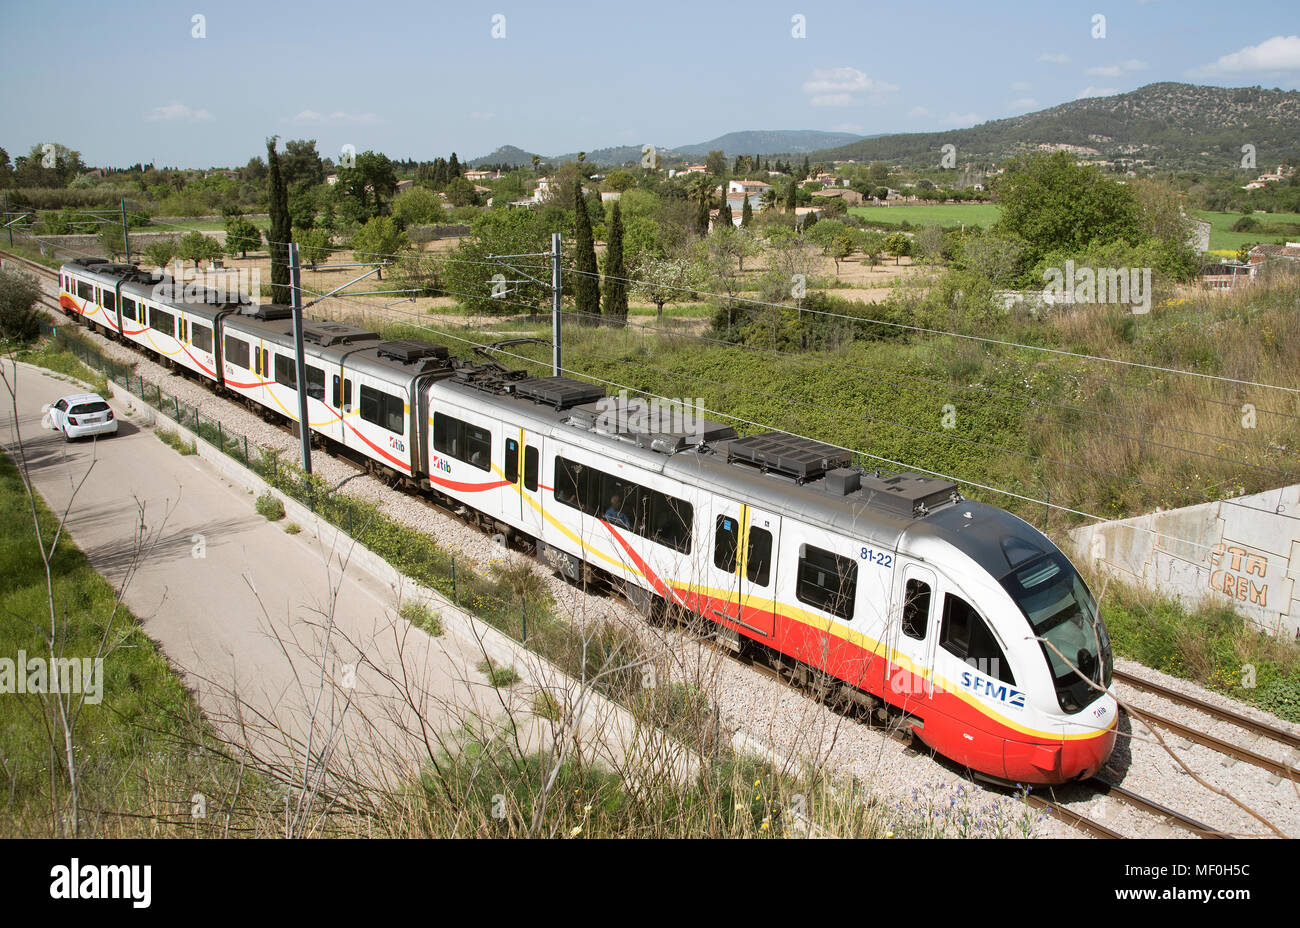 Binissalem in the central plain, Majorca, Balearic Islands, Spain. Modern electric passenger train passing through countryside surrounding Binissalem Stock Photo